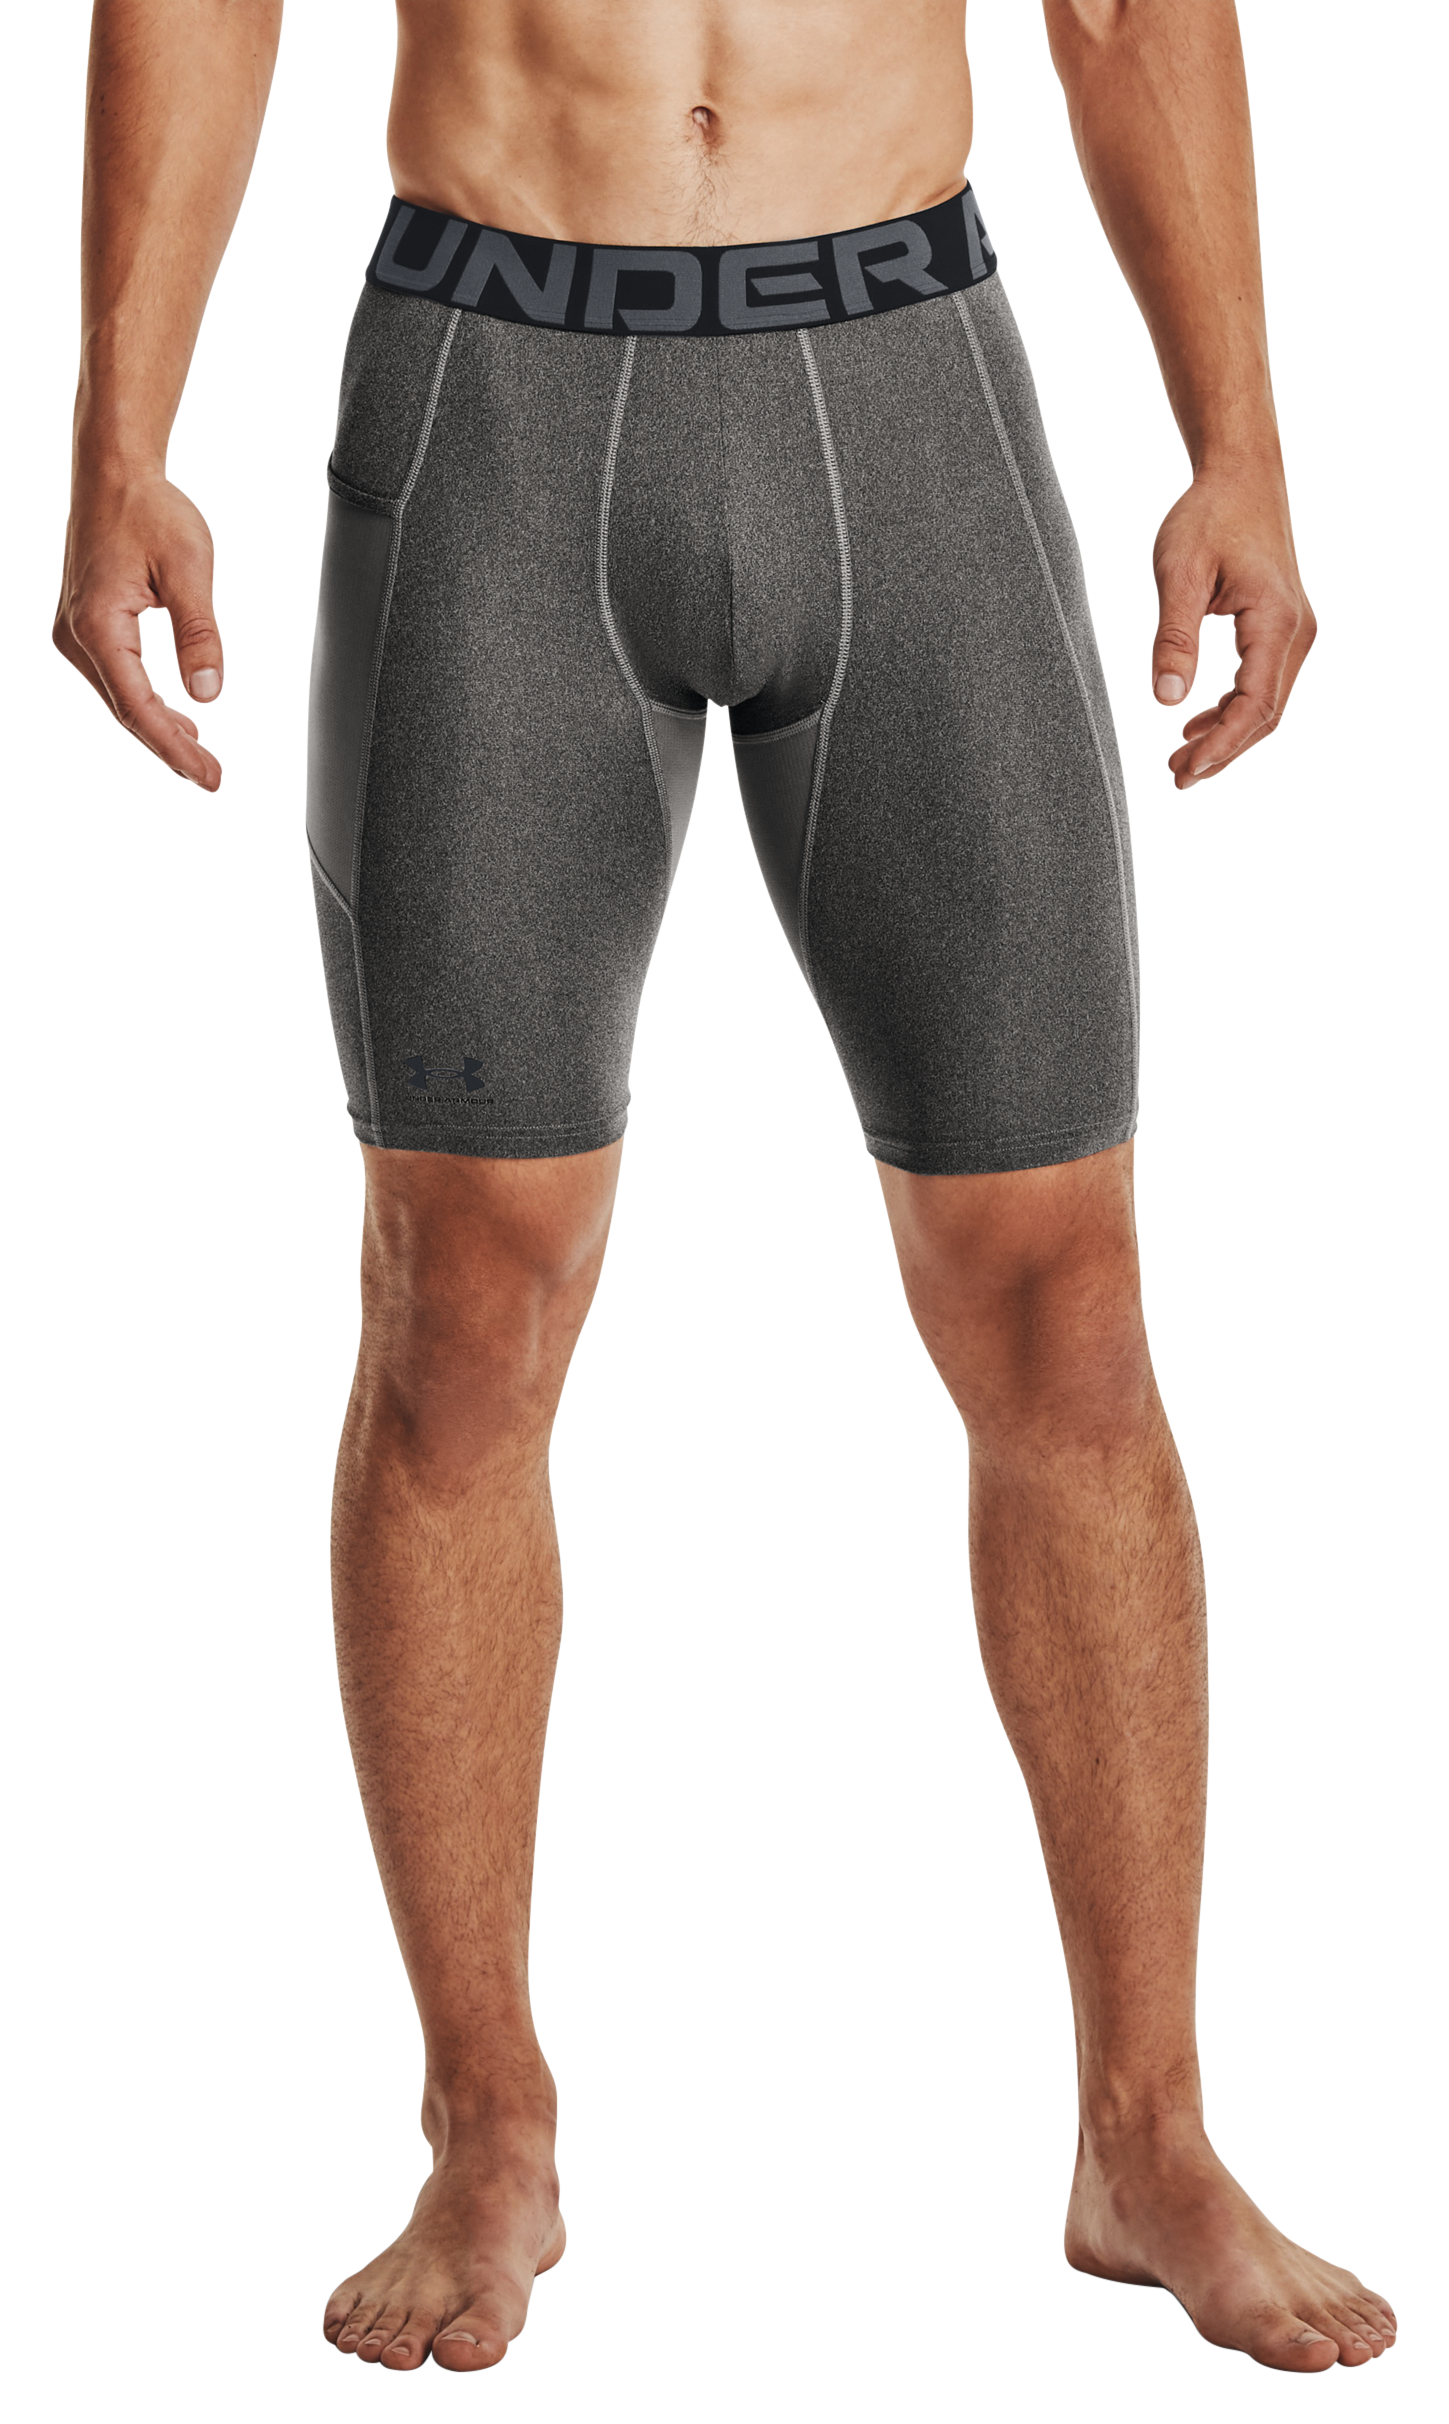 Under Armour HeatGear Pocket Long Shorts for Men - Carbon Heather/Black - XLT